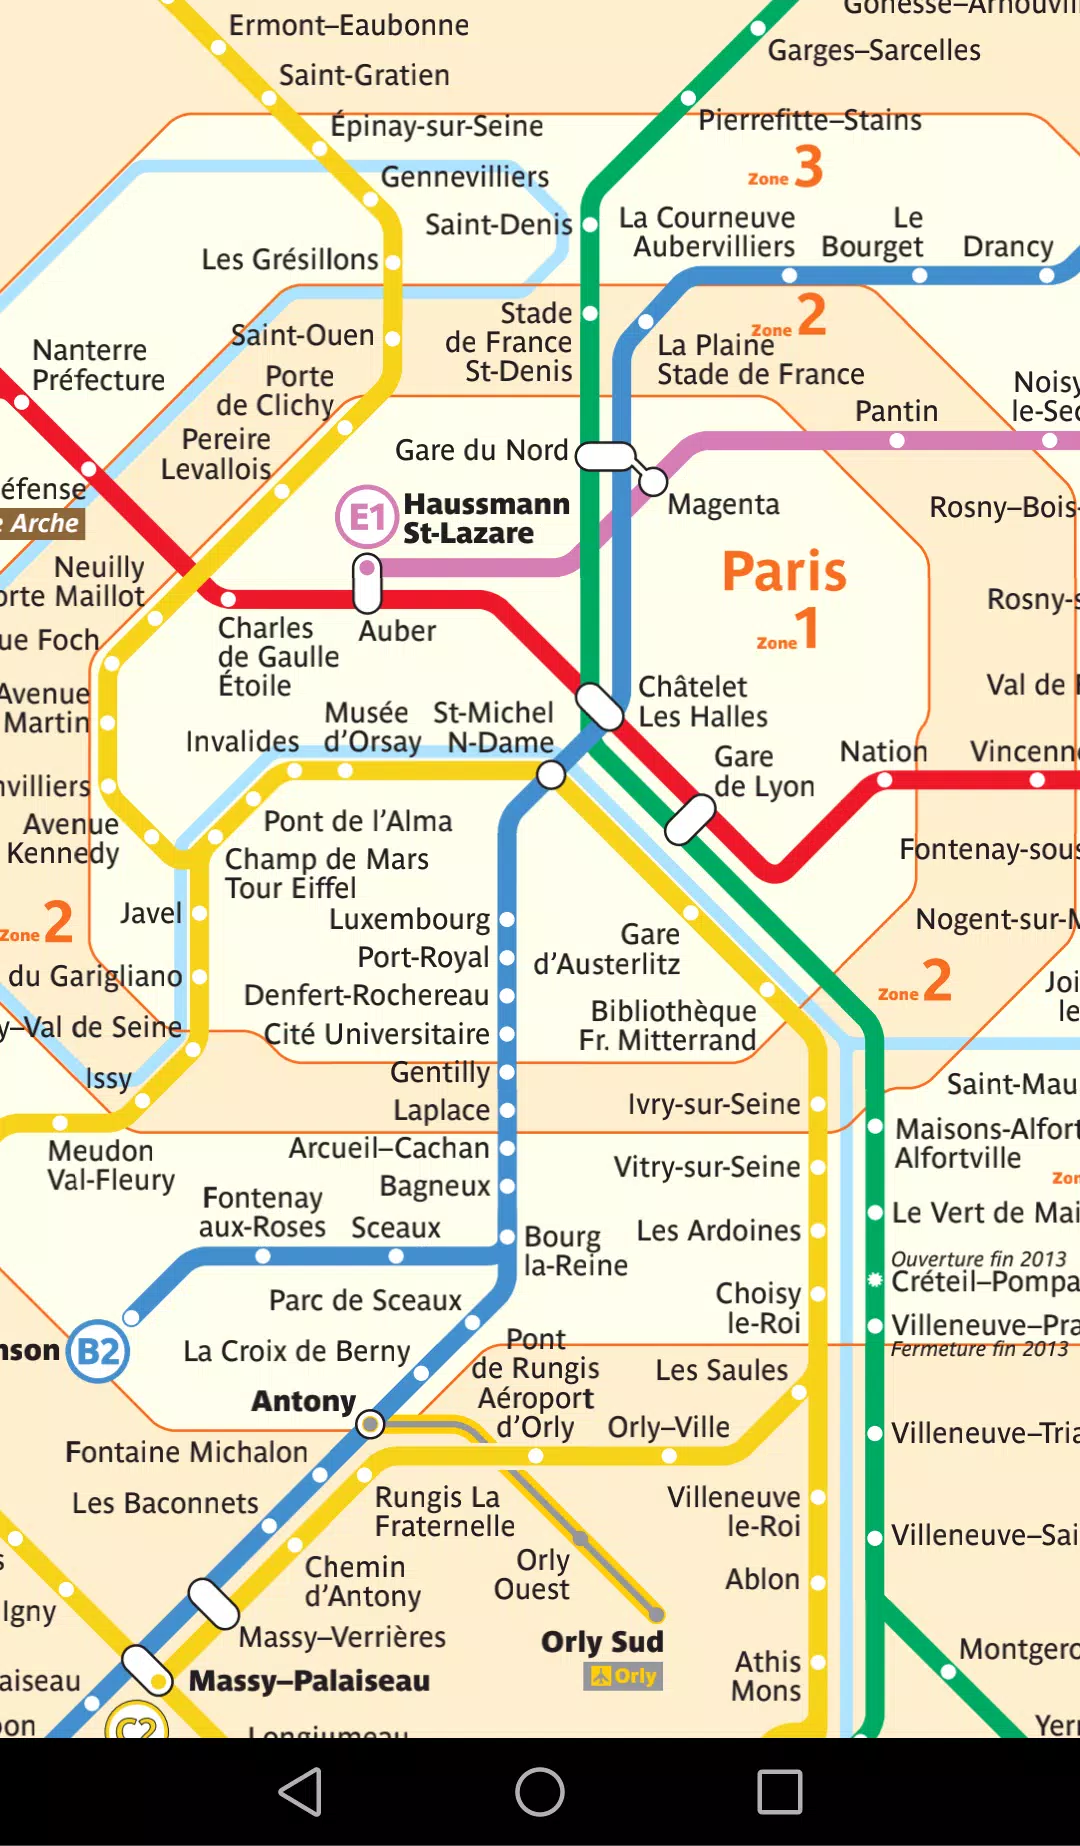 Plan metro rer bus paris APK for Android Download